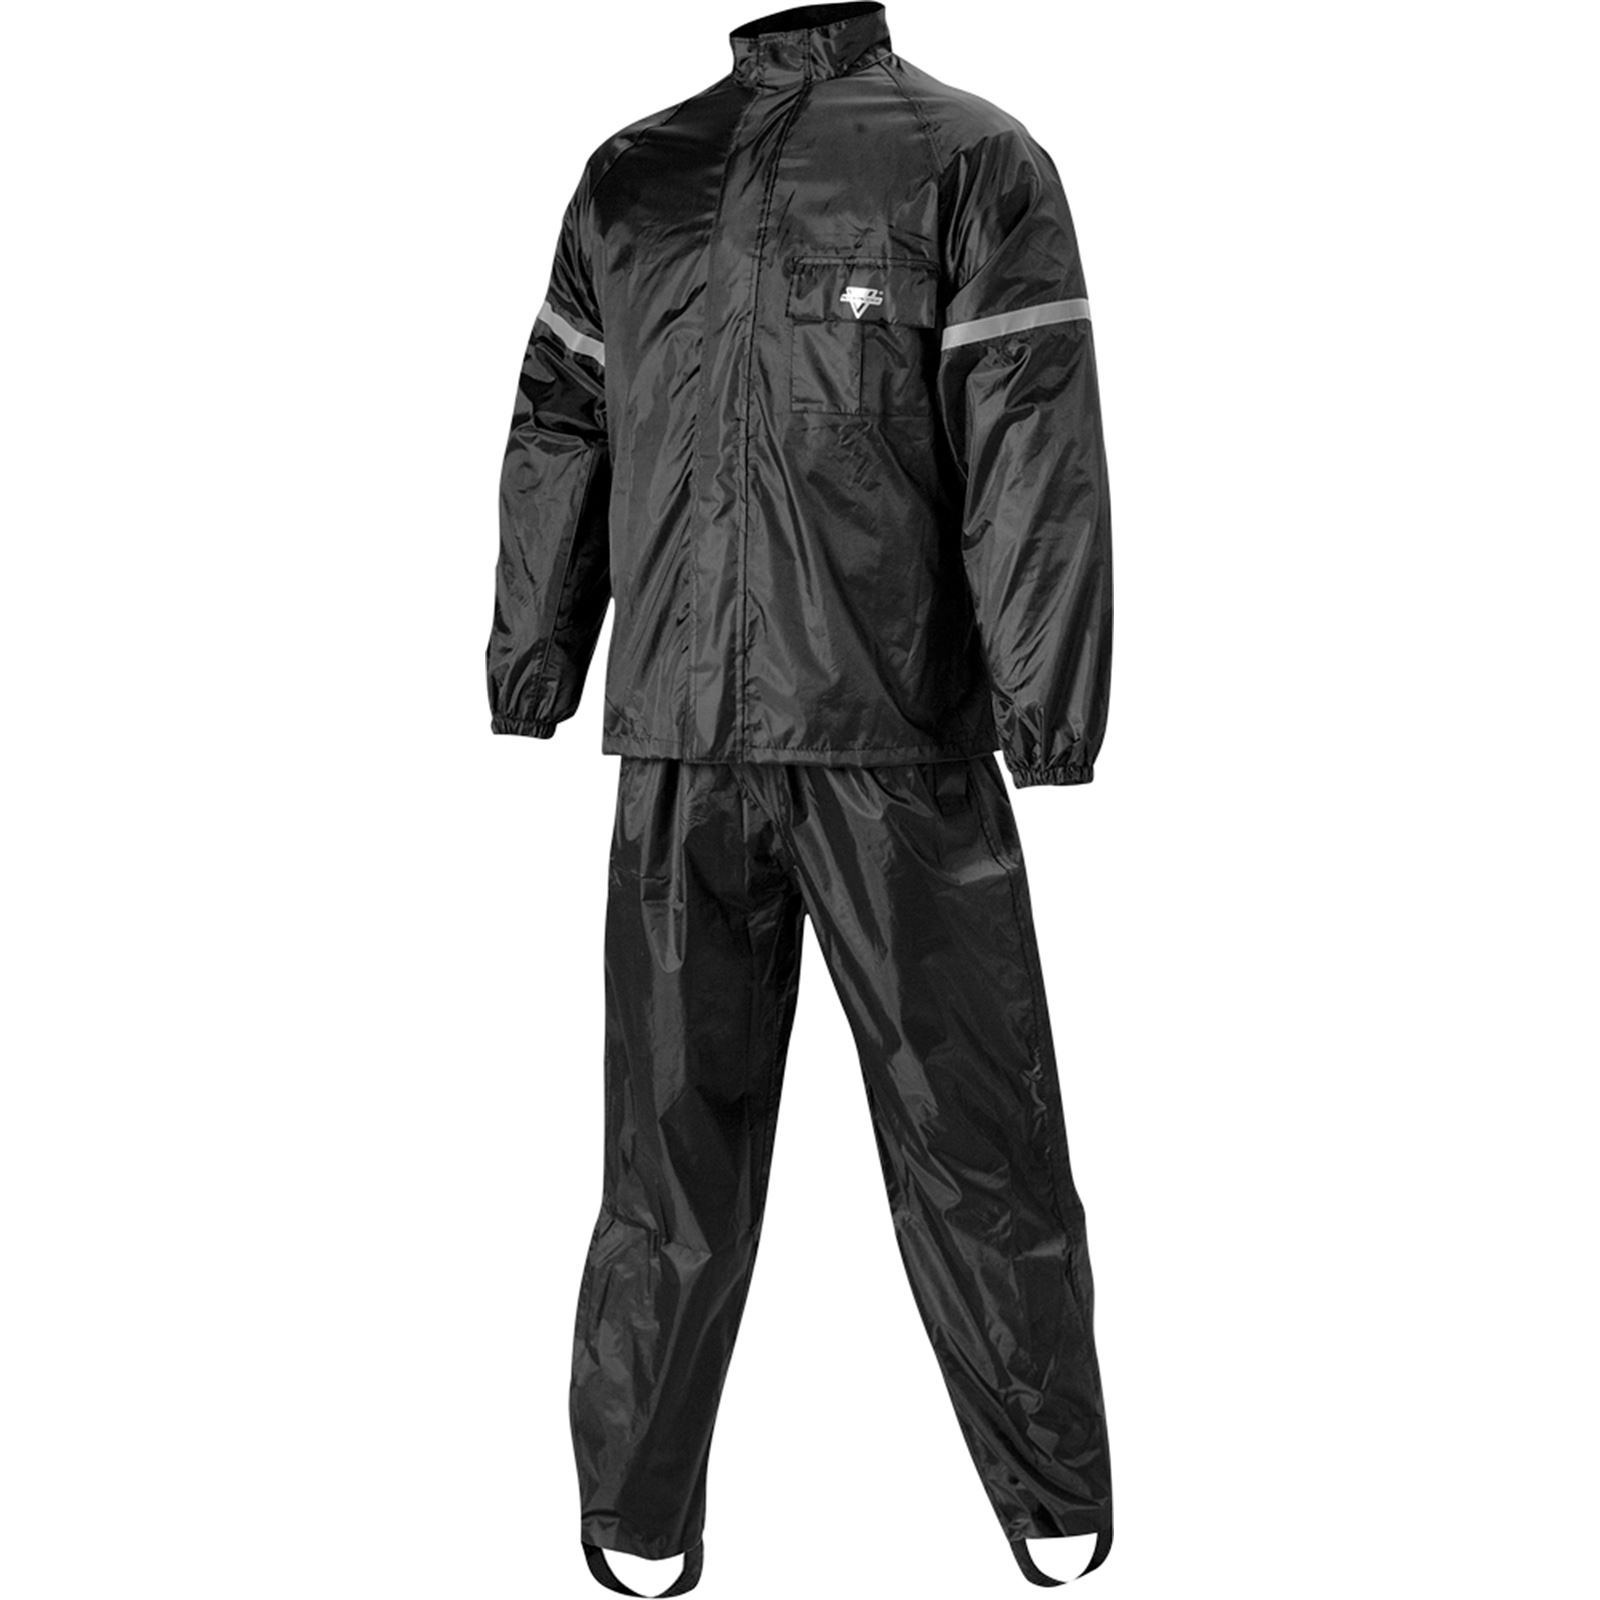 Nelson-Rigg WP-8000 Weatherpro Rain Suit